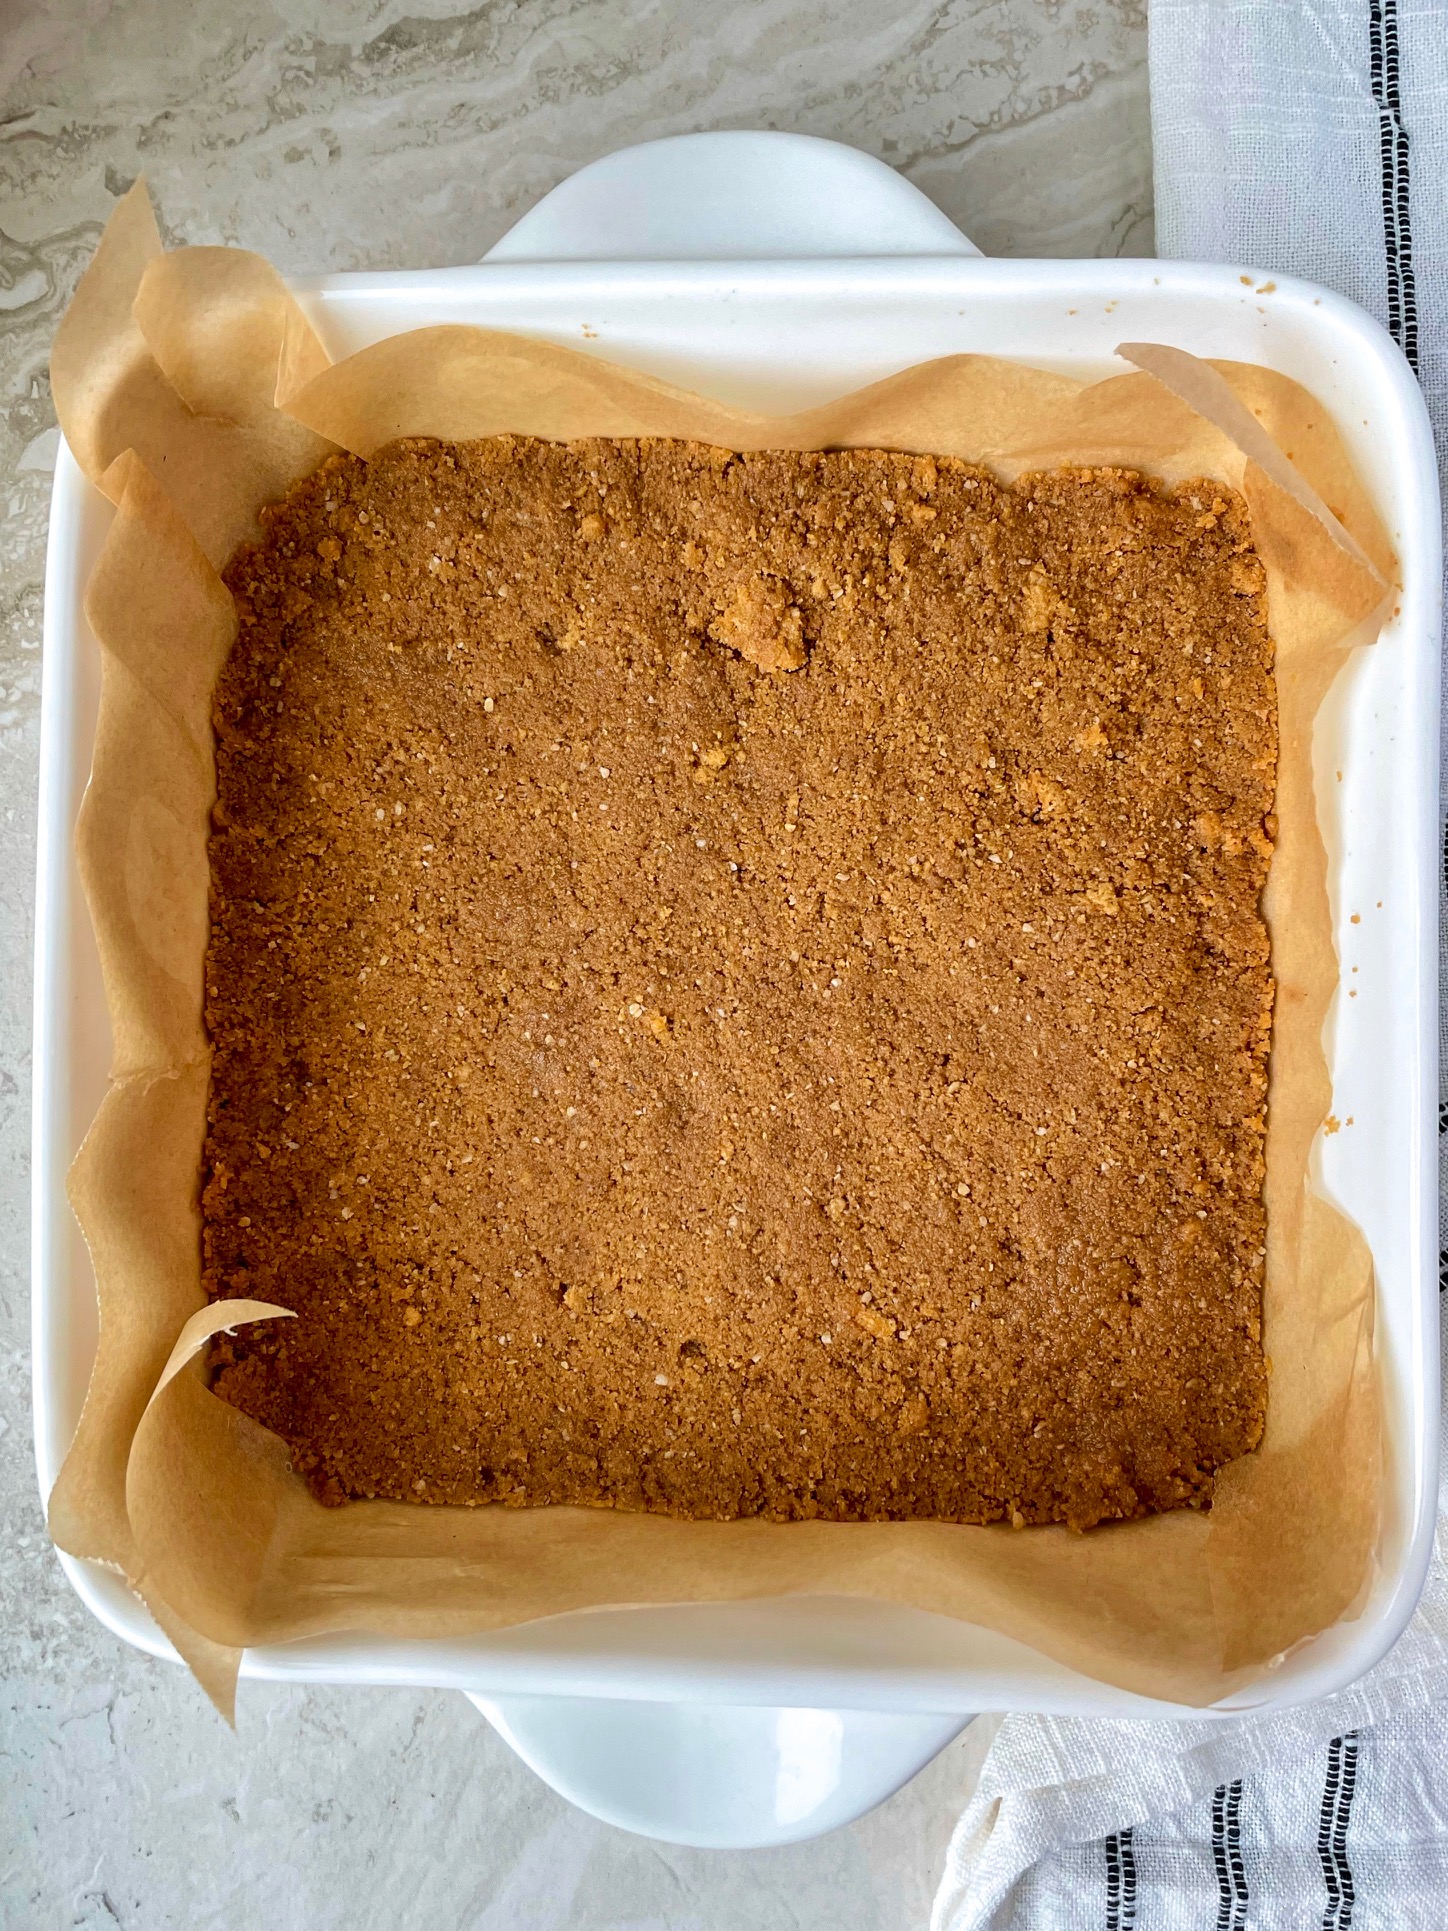 the gluten free graham cracker crust in the pan before baking